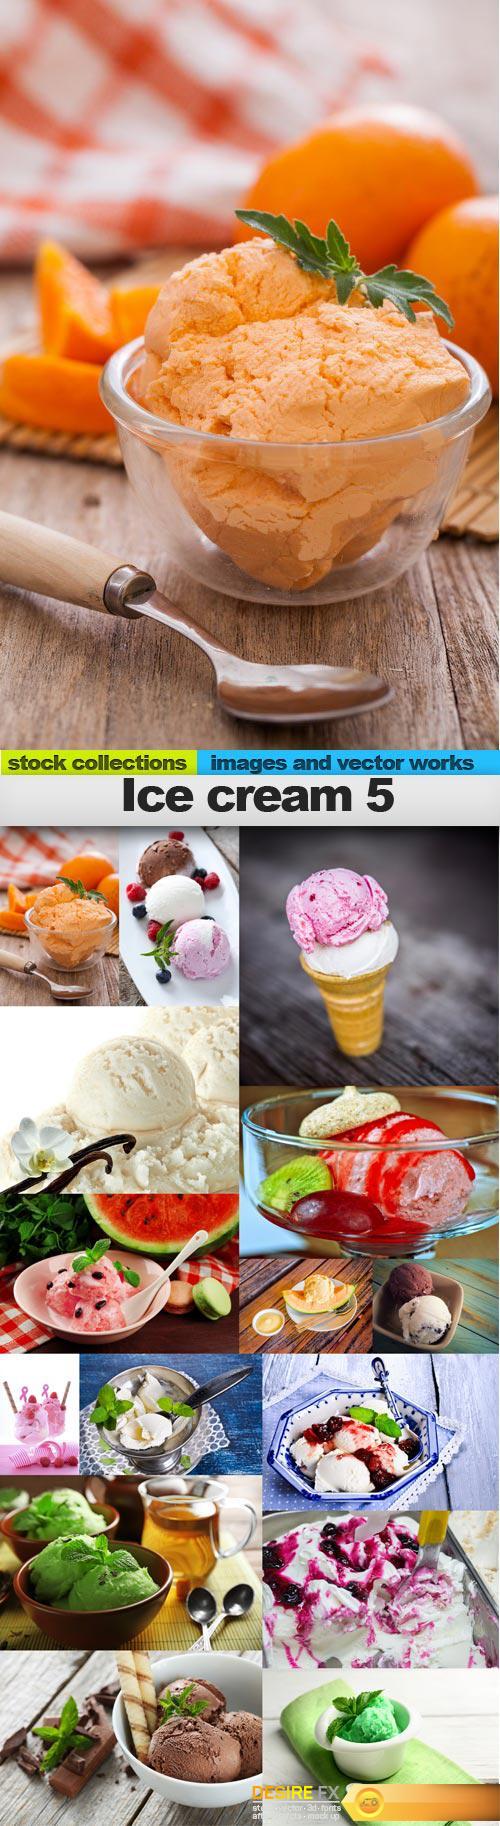 Ice cream 5, 15 x UHQ JPEG 